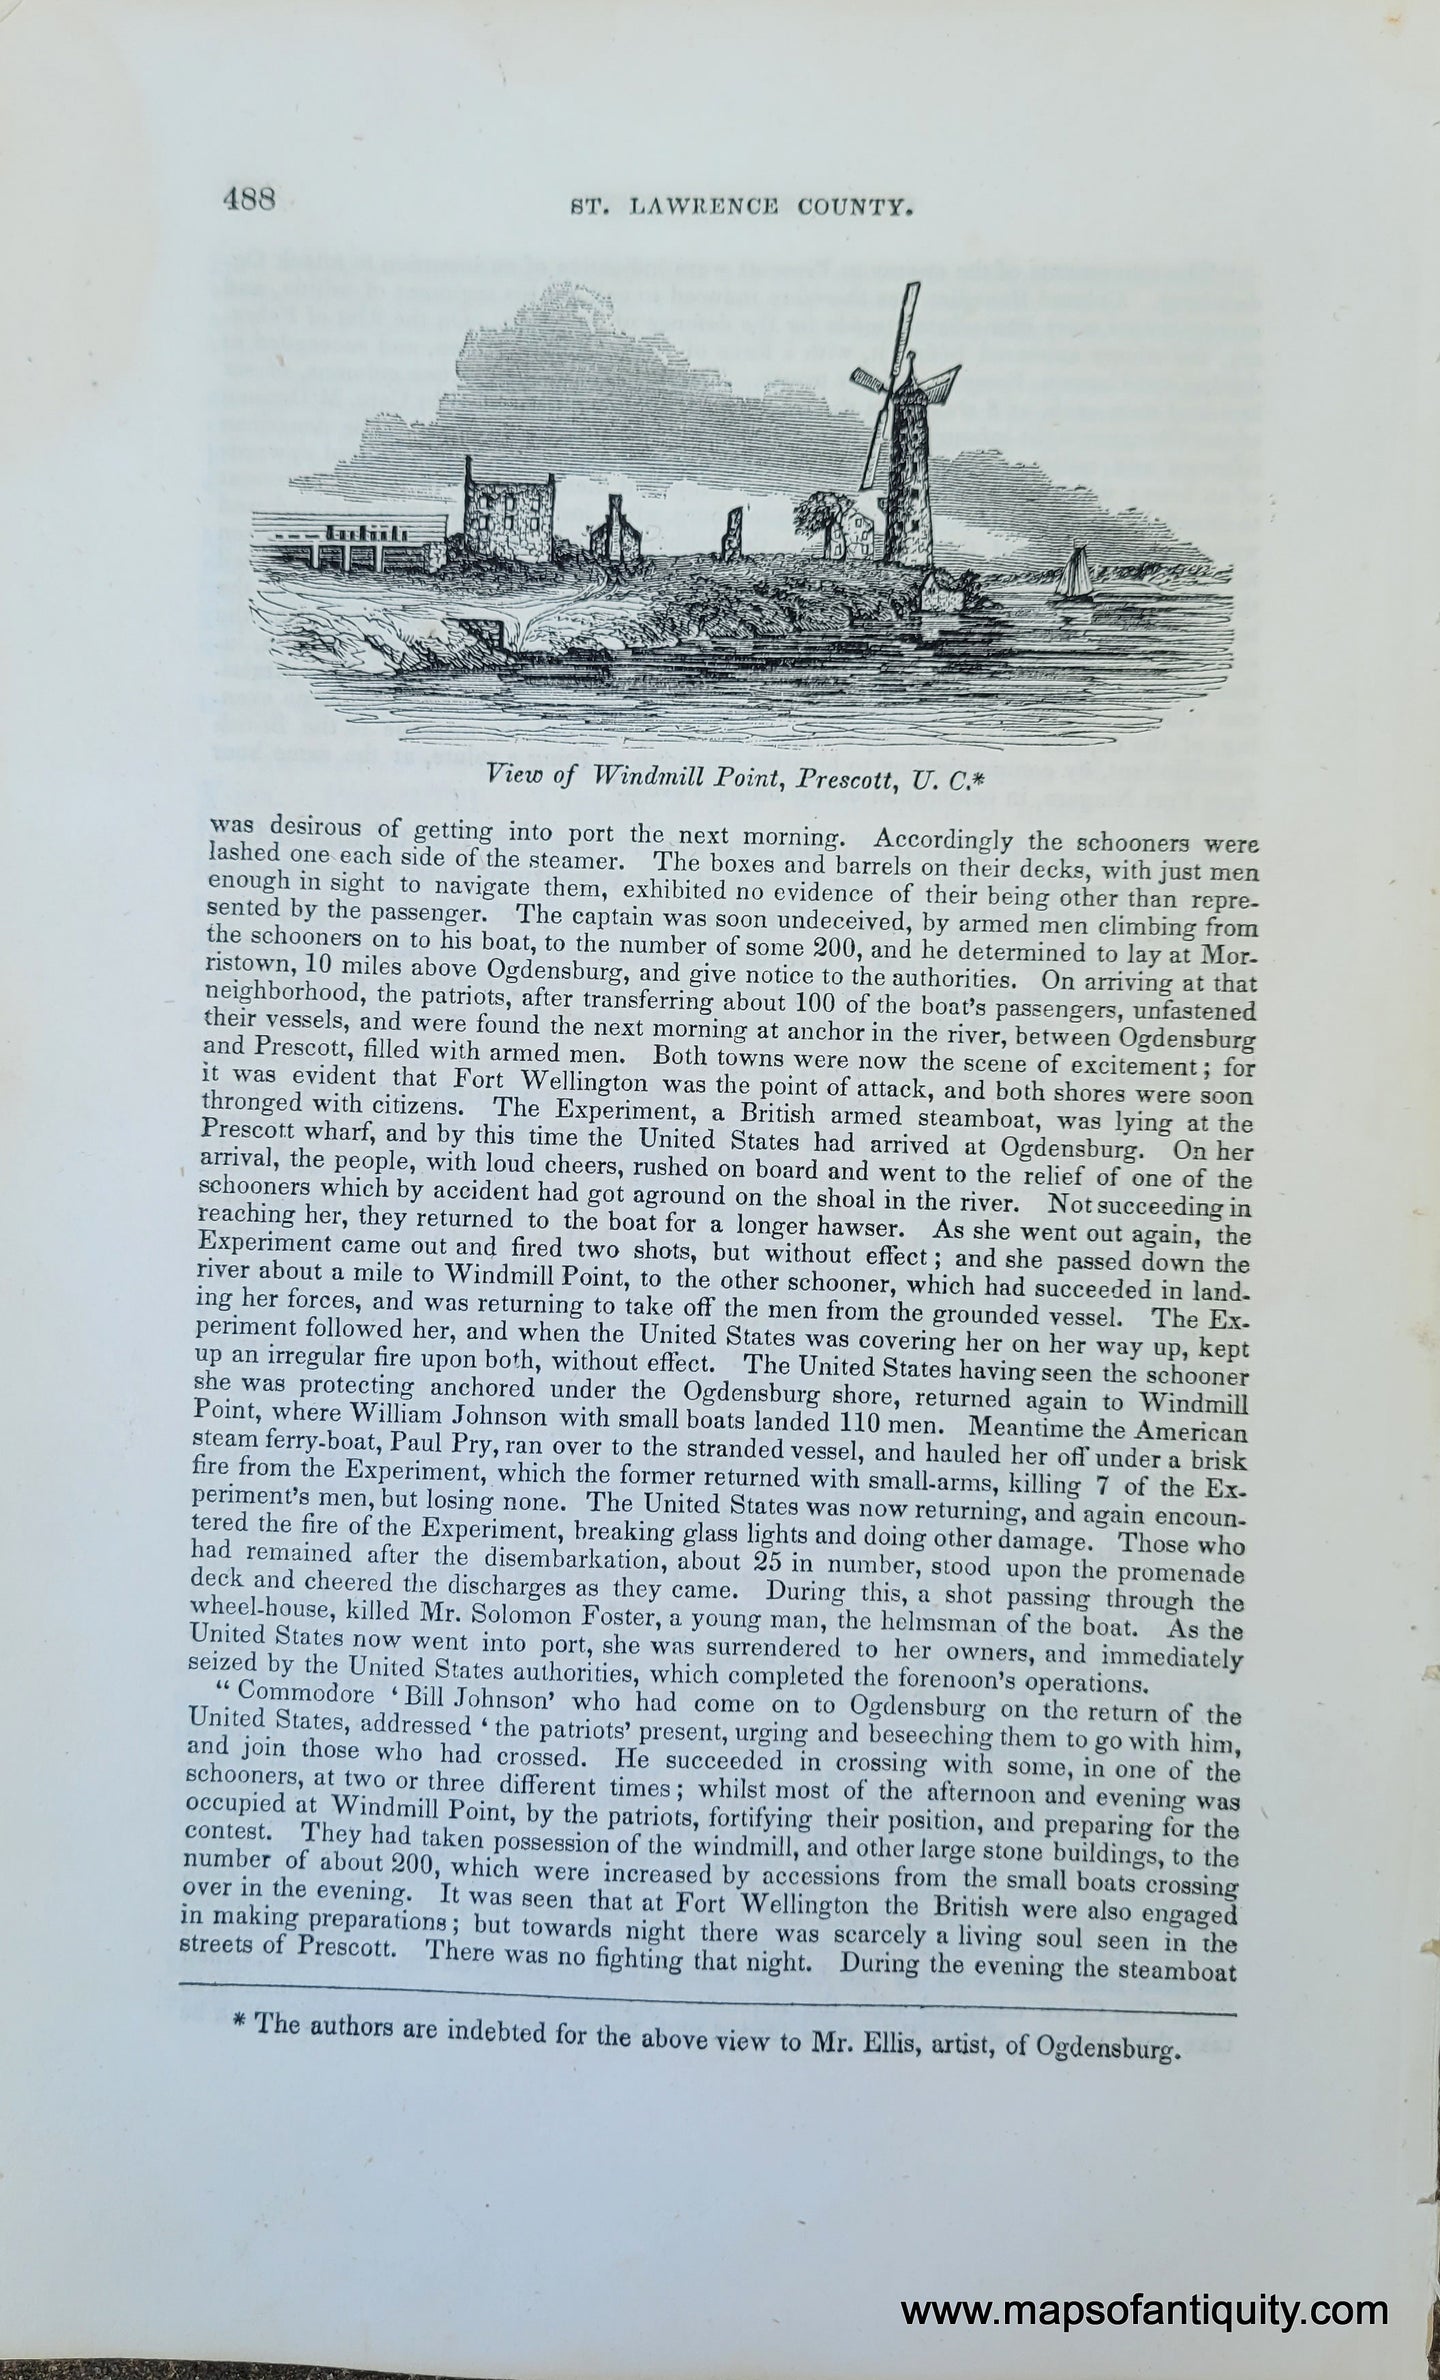 Genuine-Antique-Illustration-View-of-Windmill-Point,-Prescott,-U.C.-(Upper-Canada,-Ontario)-1841-Barber-Maps-Of-Antiquity